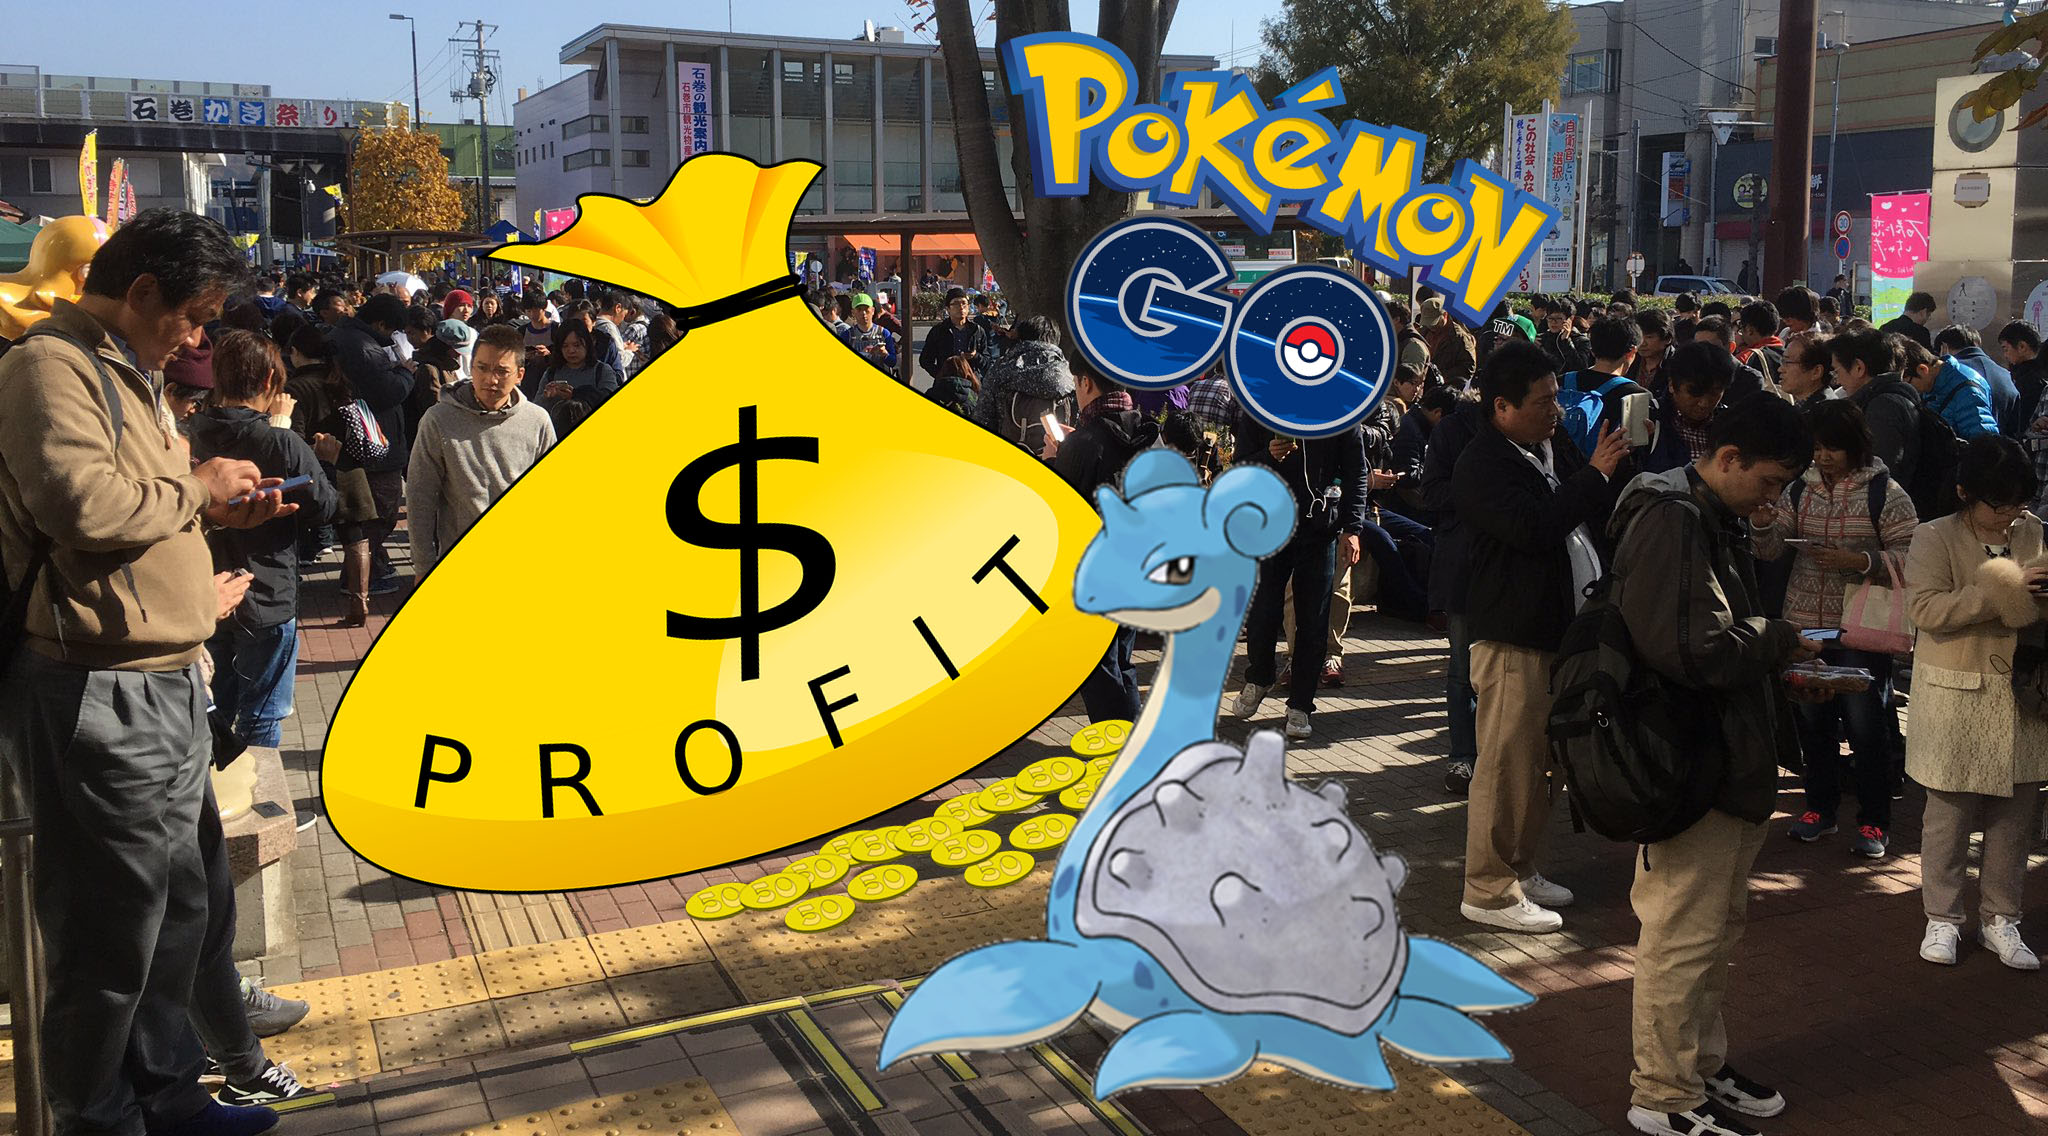 Pokémon GO: Lapras-Event beschert Fukushima-Region 16 Millionen Euro